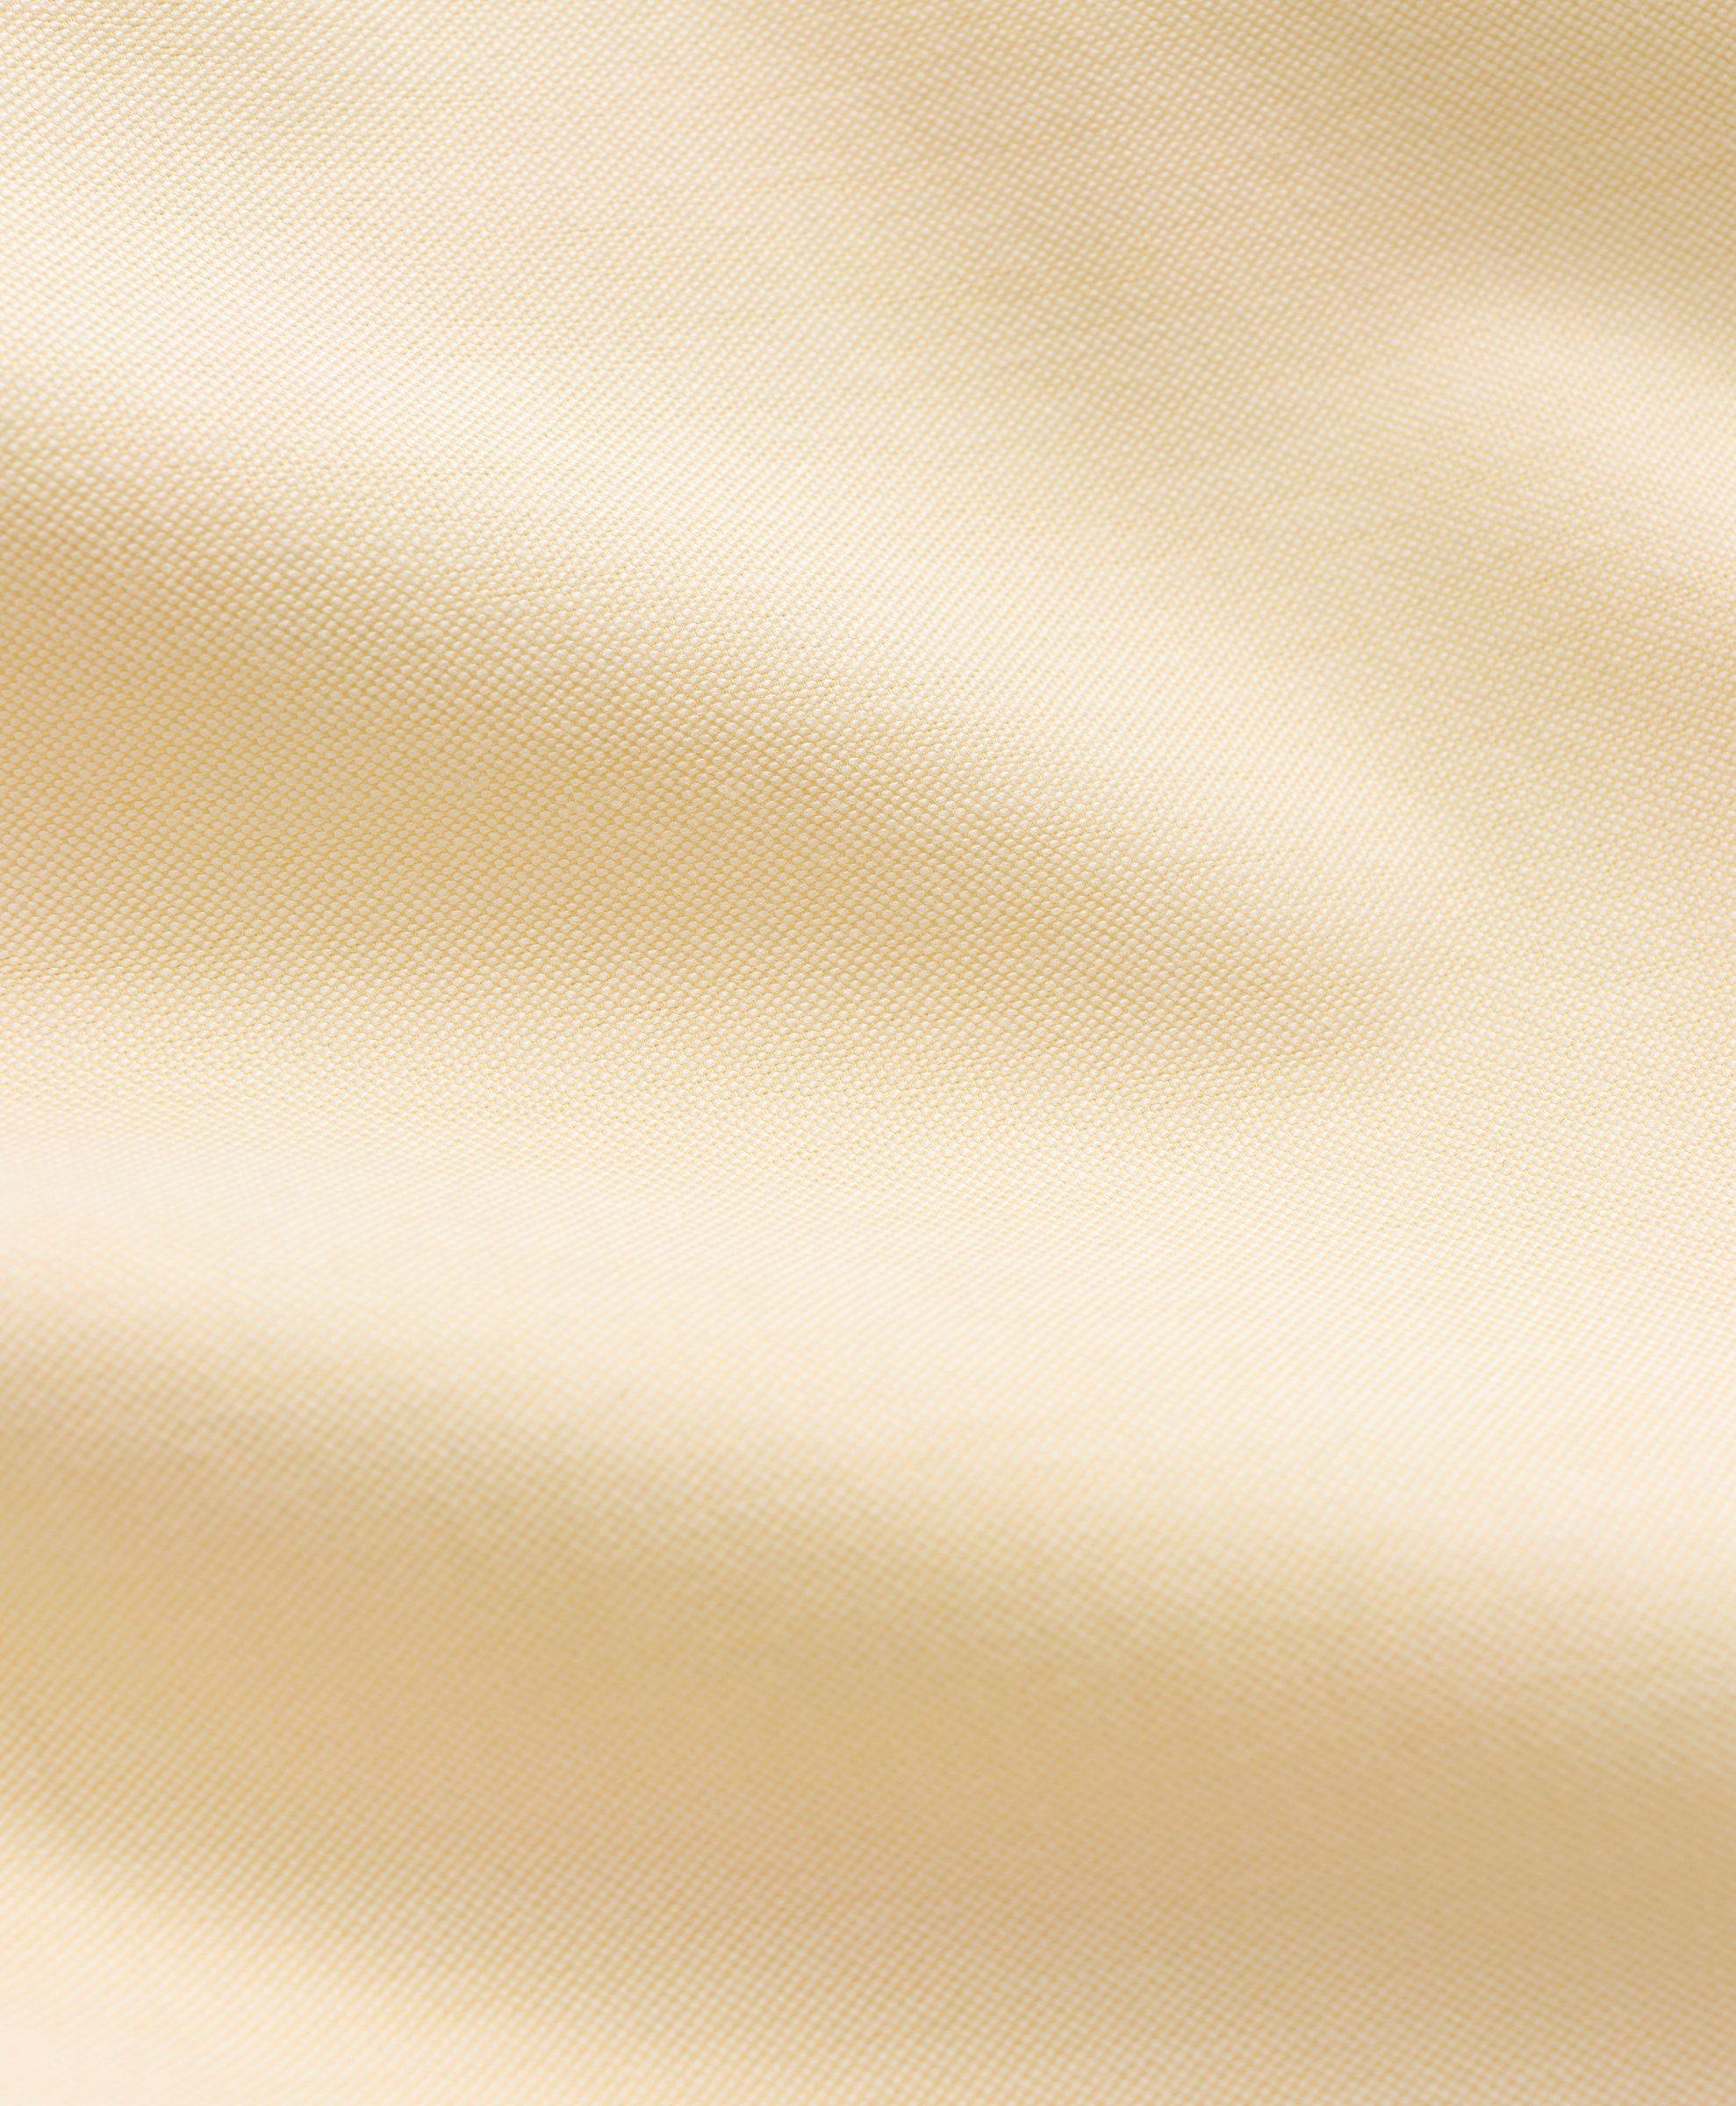 Stretch Regent Regular-Fit Sport Shirt, Non-Iron Oxford Button Down Collar, image 2